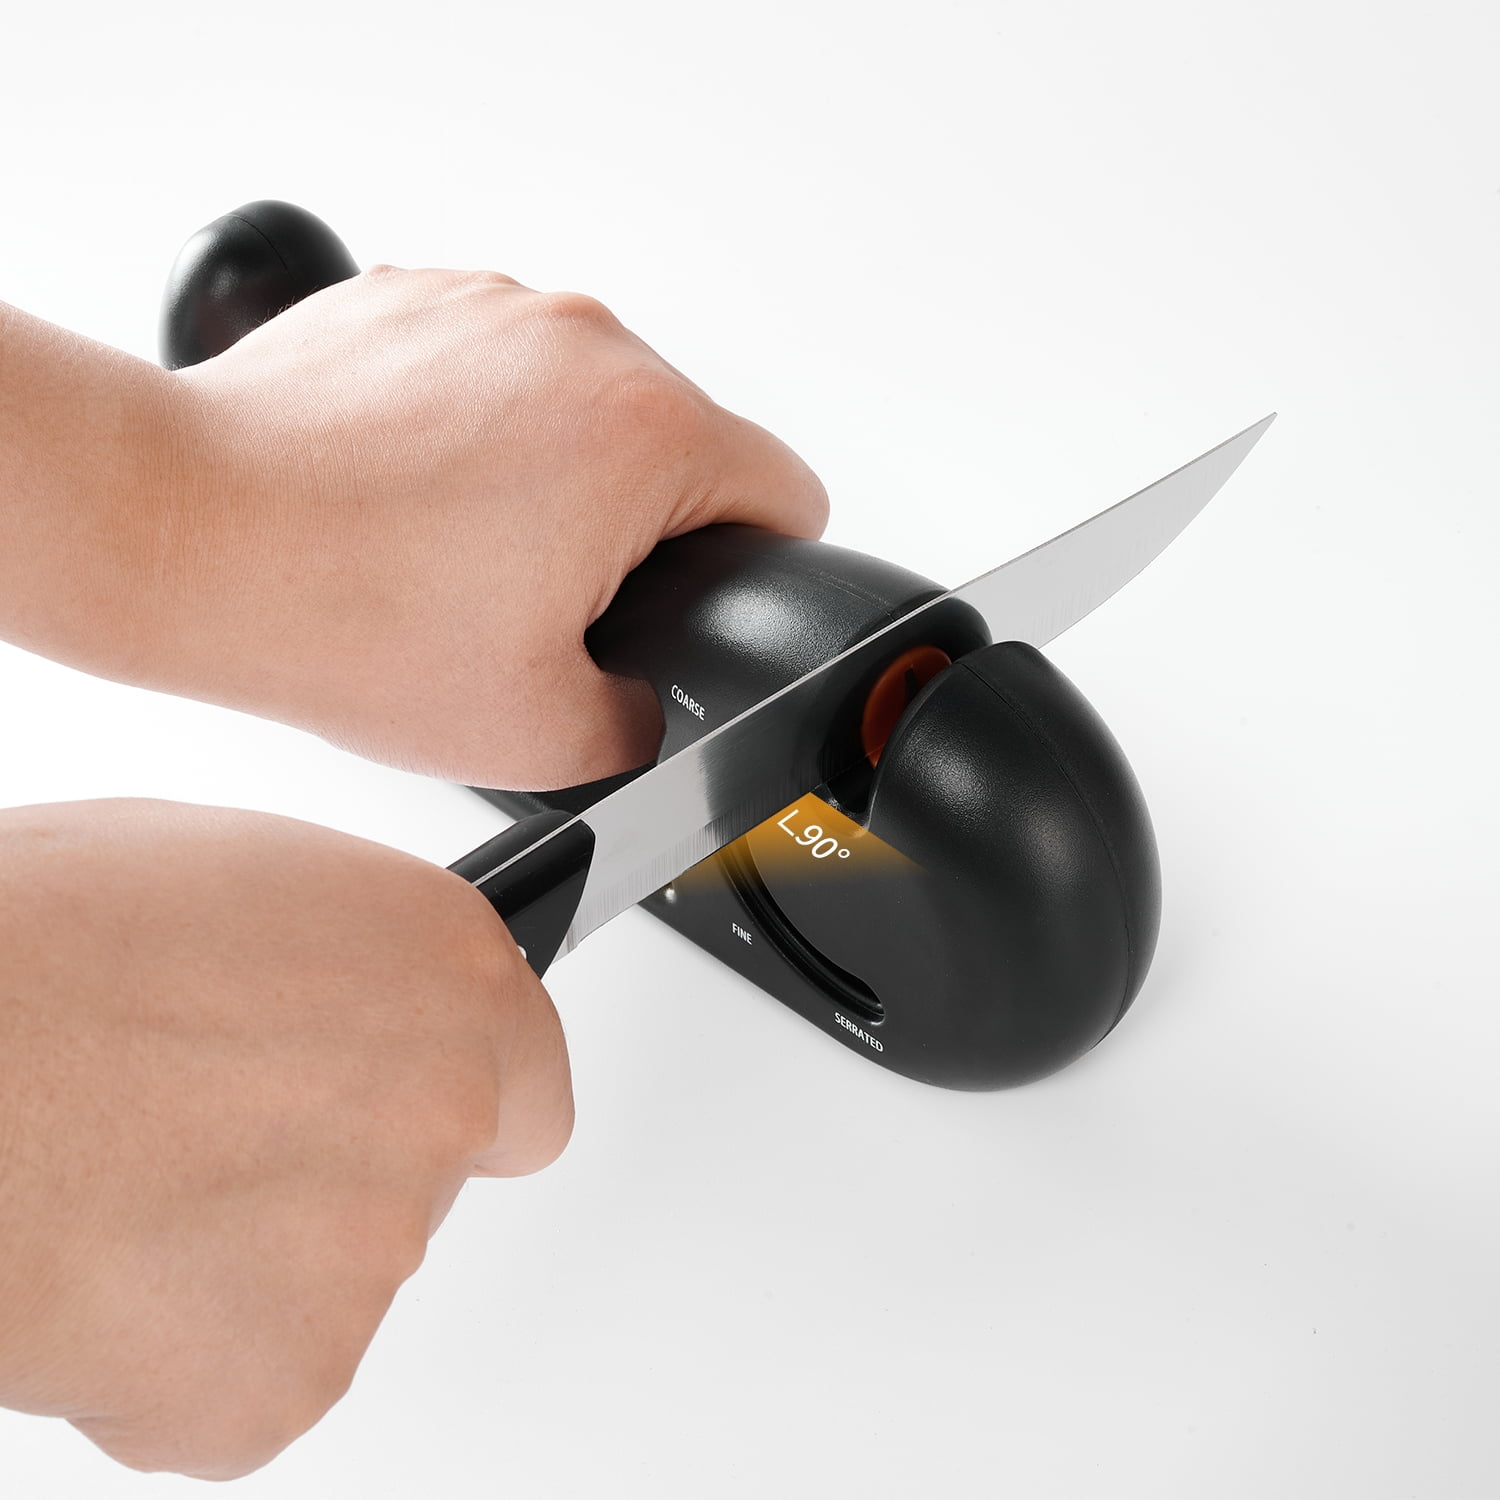 MB Kitchen Knife Accessories: 3-Stage Knife Sharpener Helps Repair,  Restore, Polish Blades (Black)